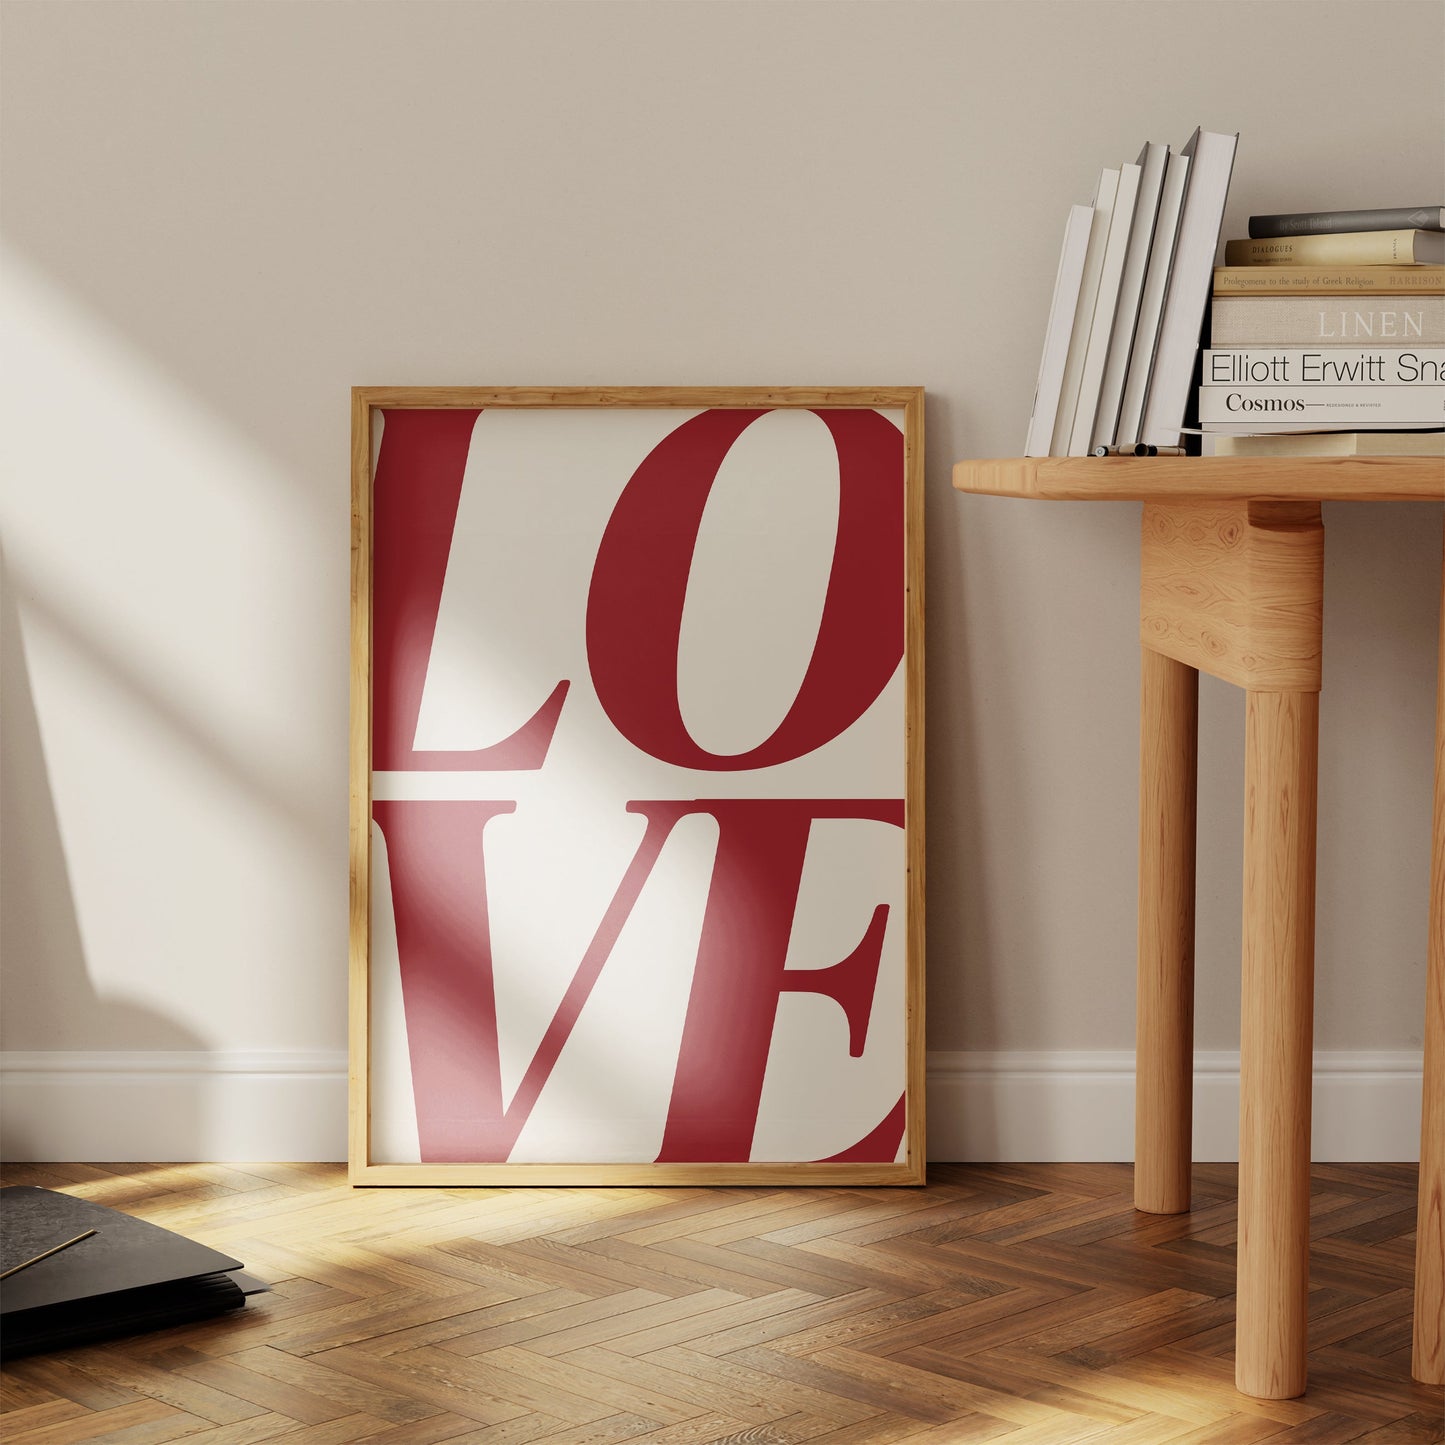 Love Typography Art Print